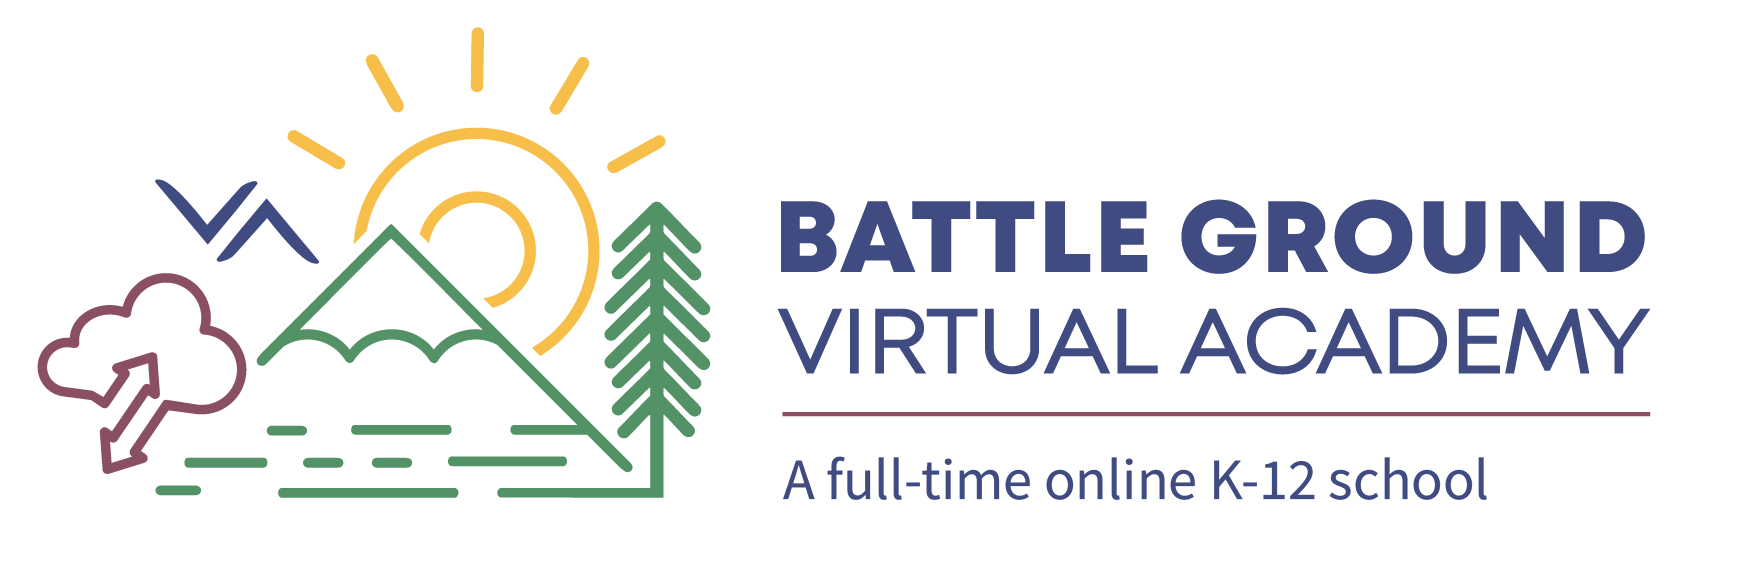 Full time online school - Battle Ground Virtual Academy